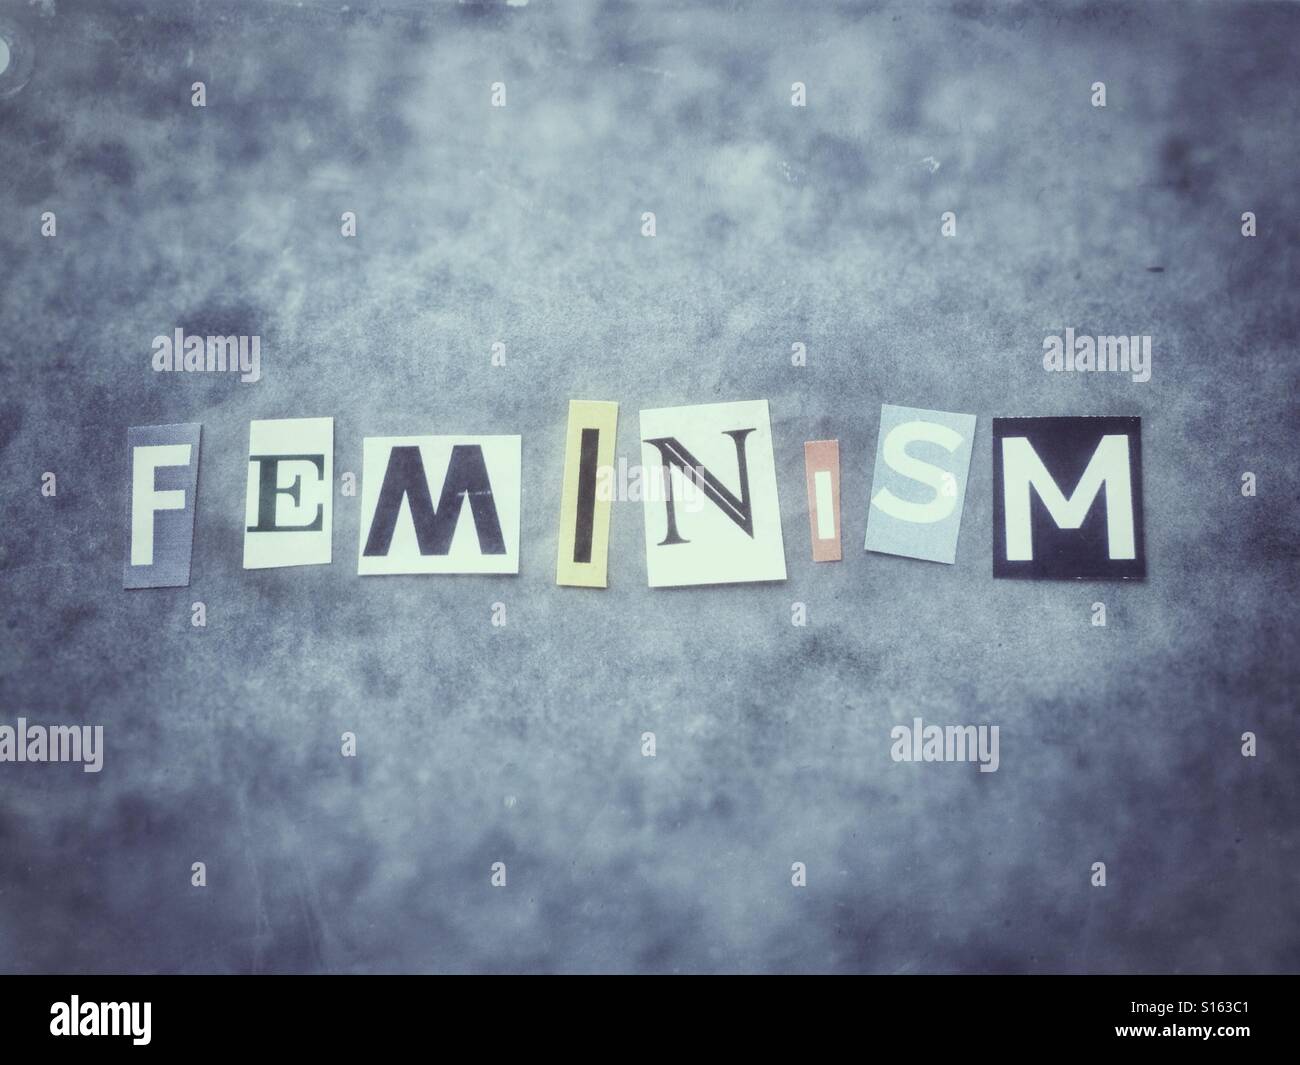 Feminism Stock Photo